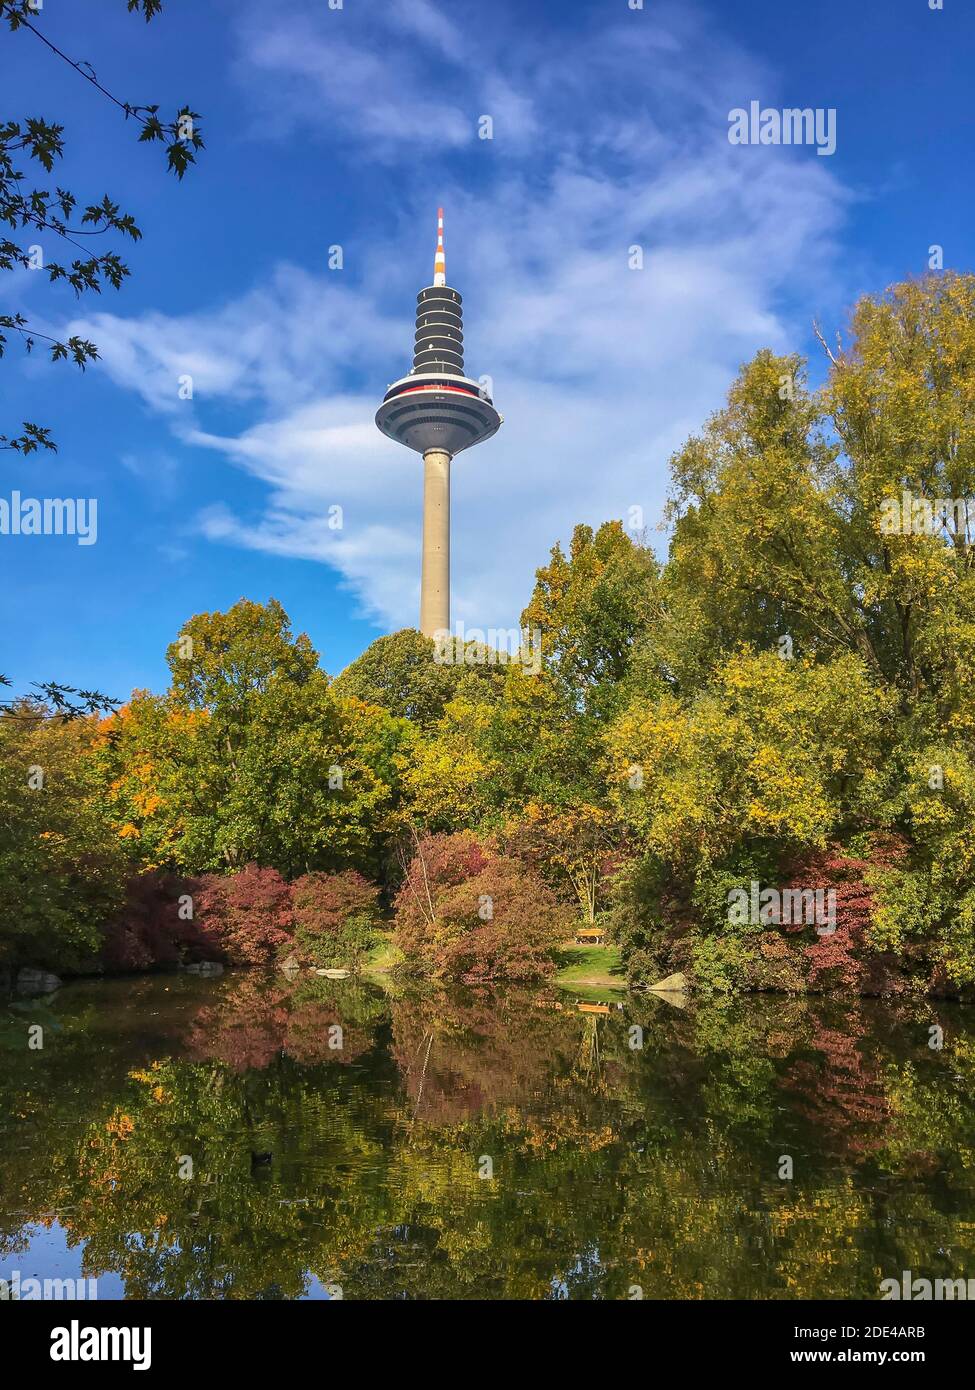 Europe Tower, Ginnheimer Spargel, in autumn, Bundesbankpark, Frankfurt am Main, Hesse, Germany Stock Photo